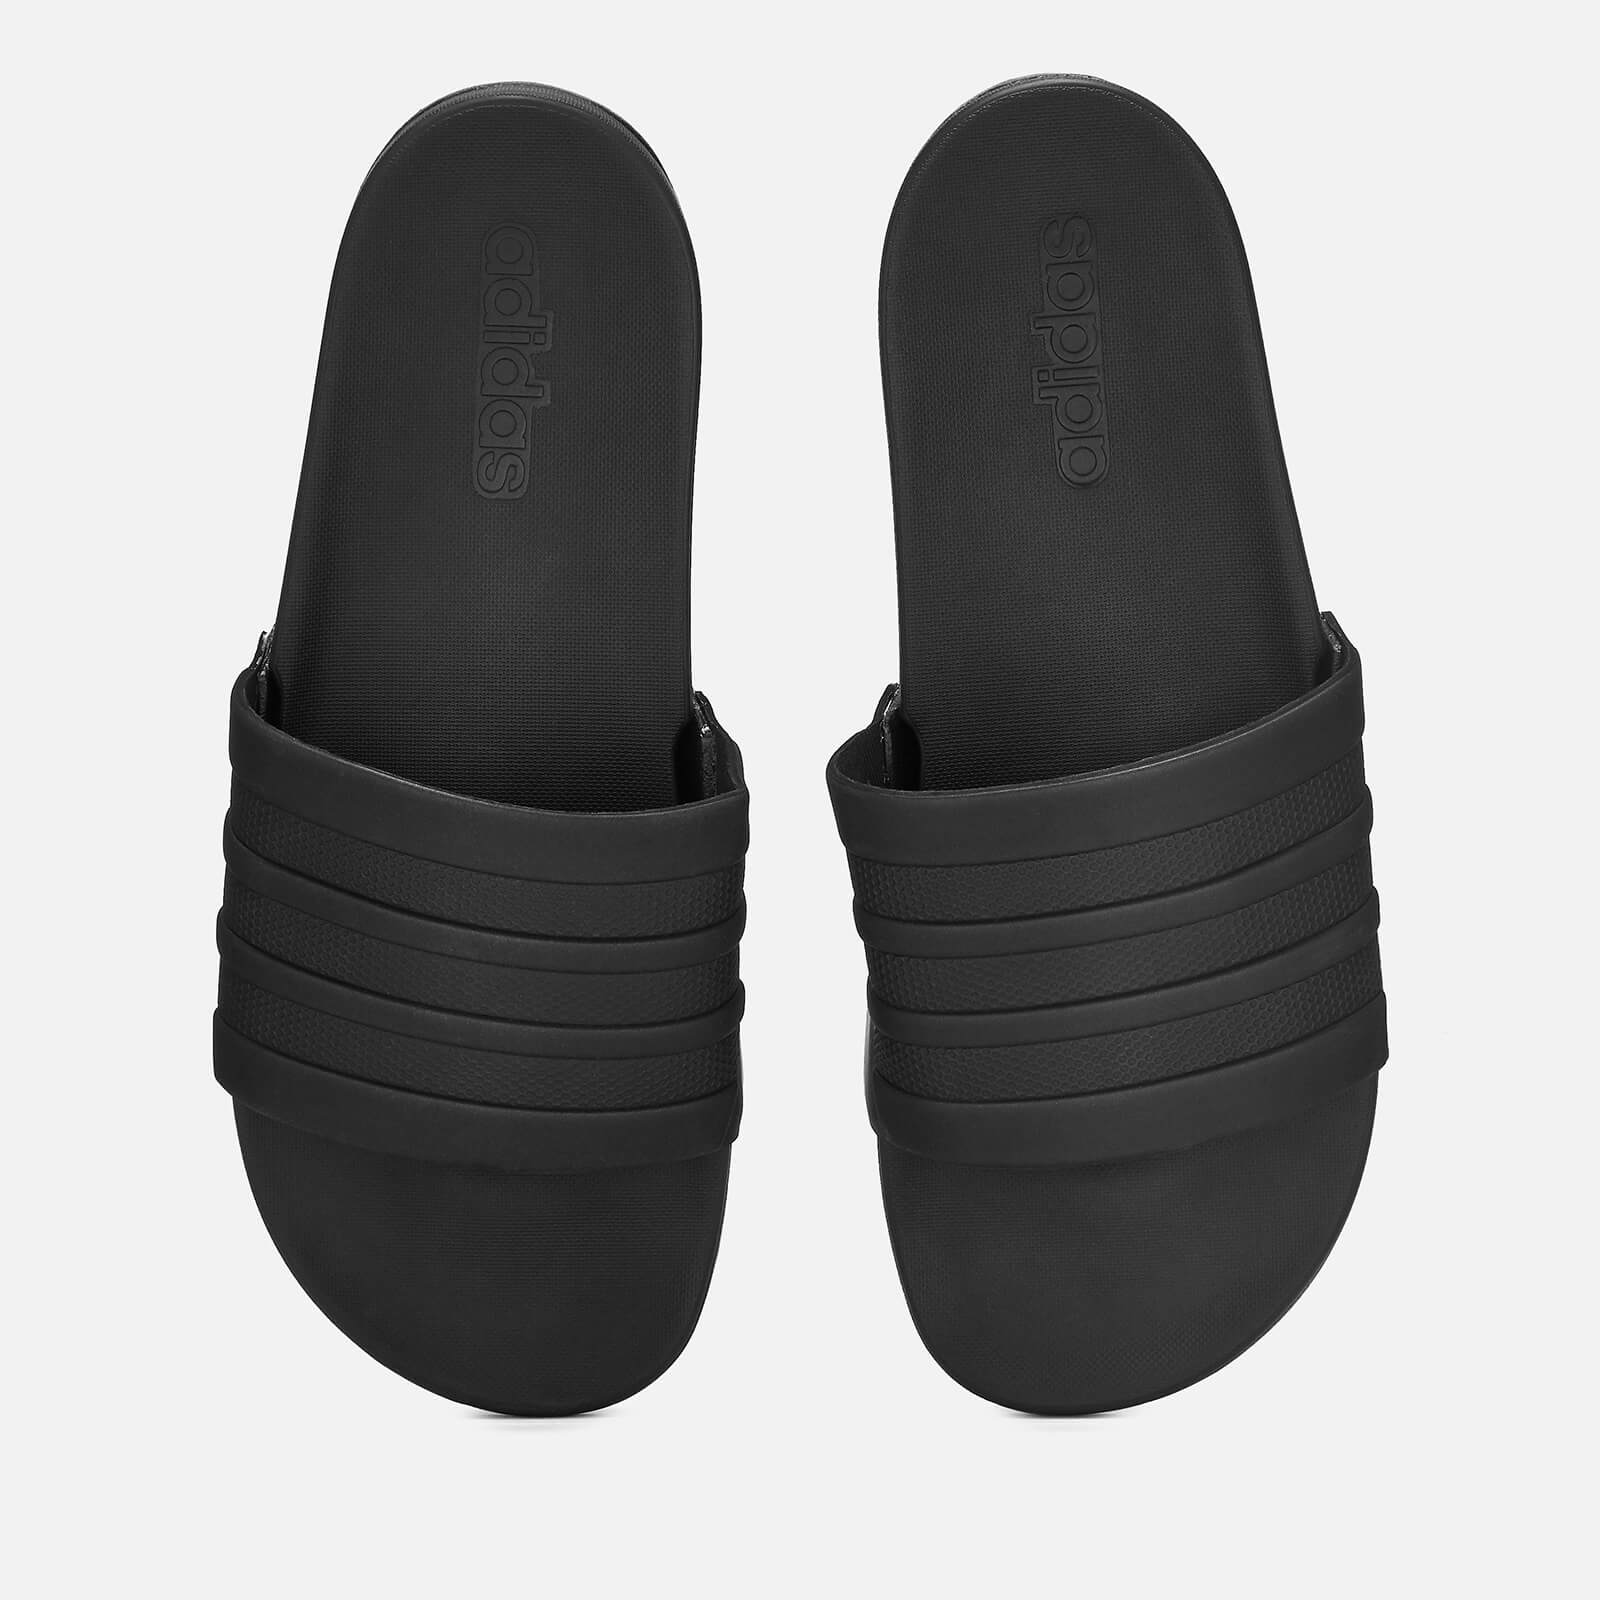 adidas men's comfort slides